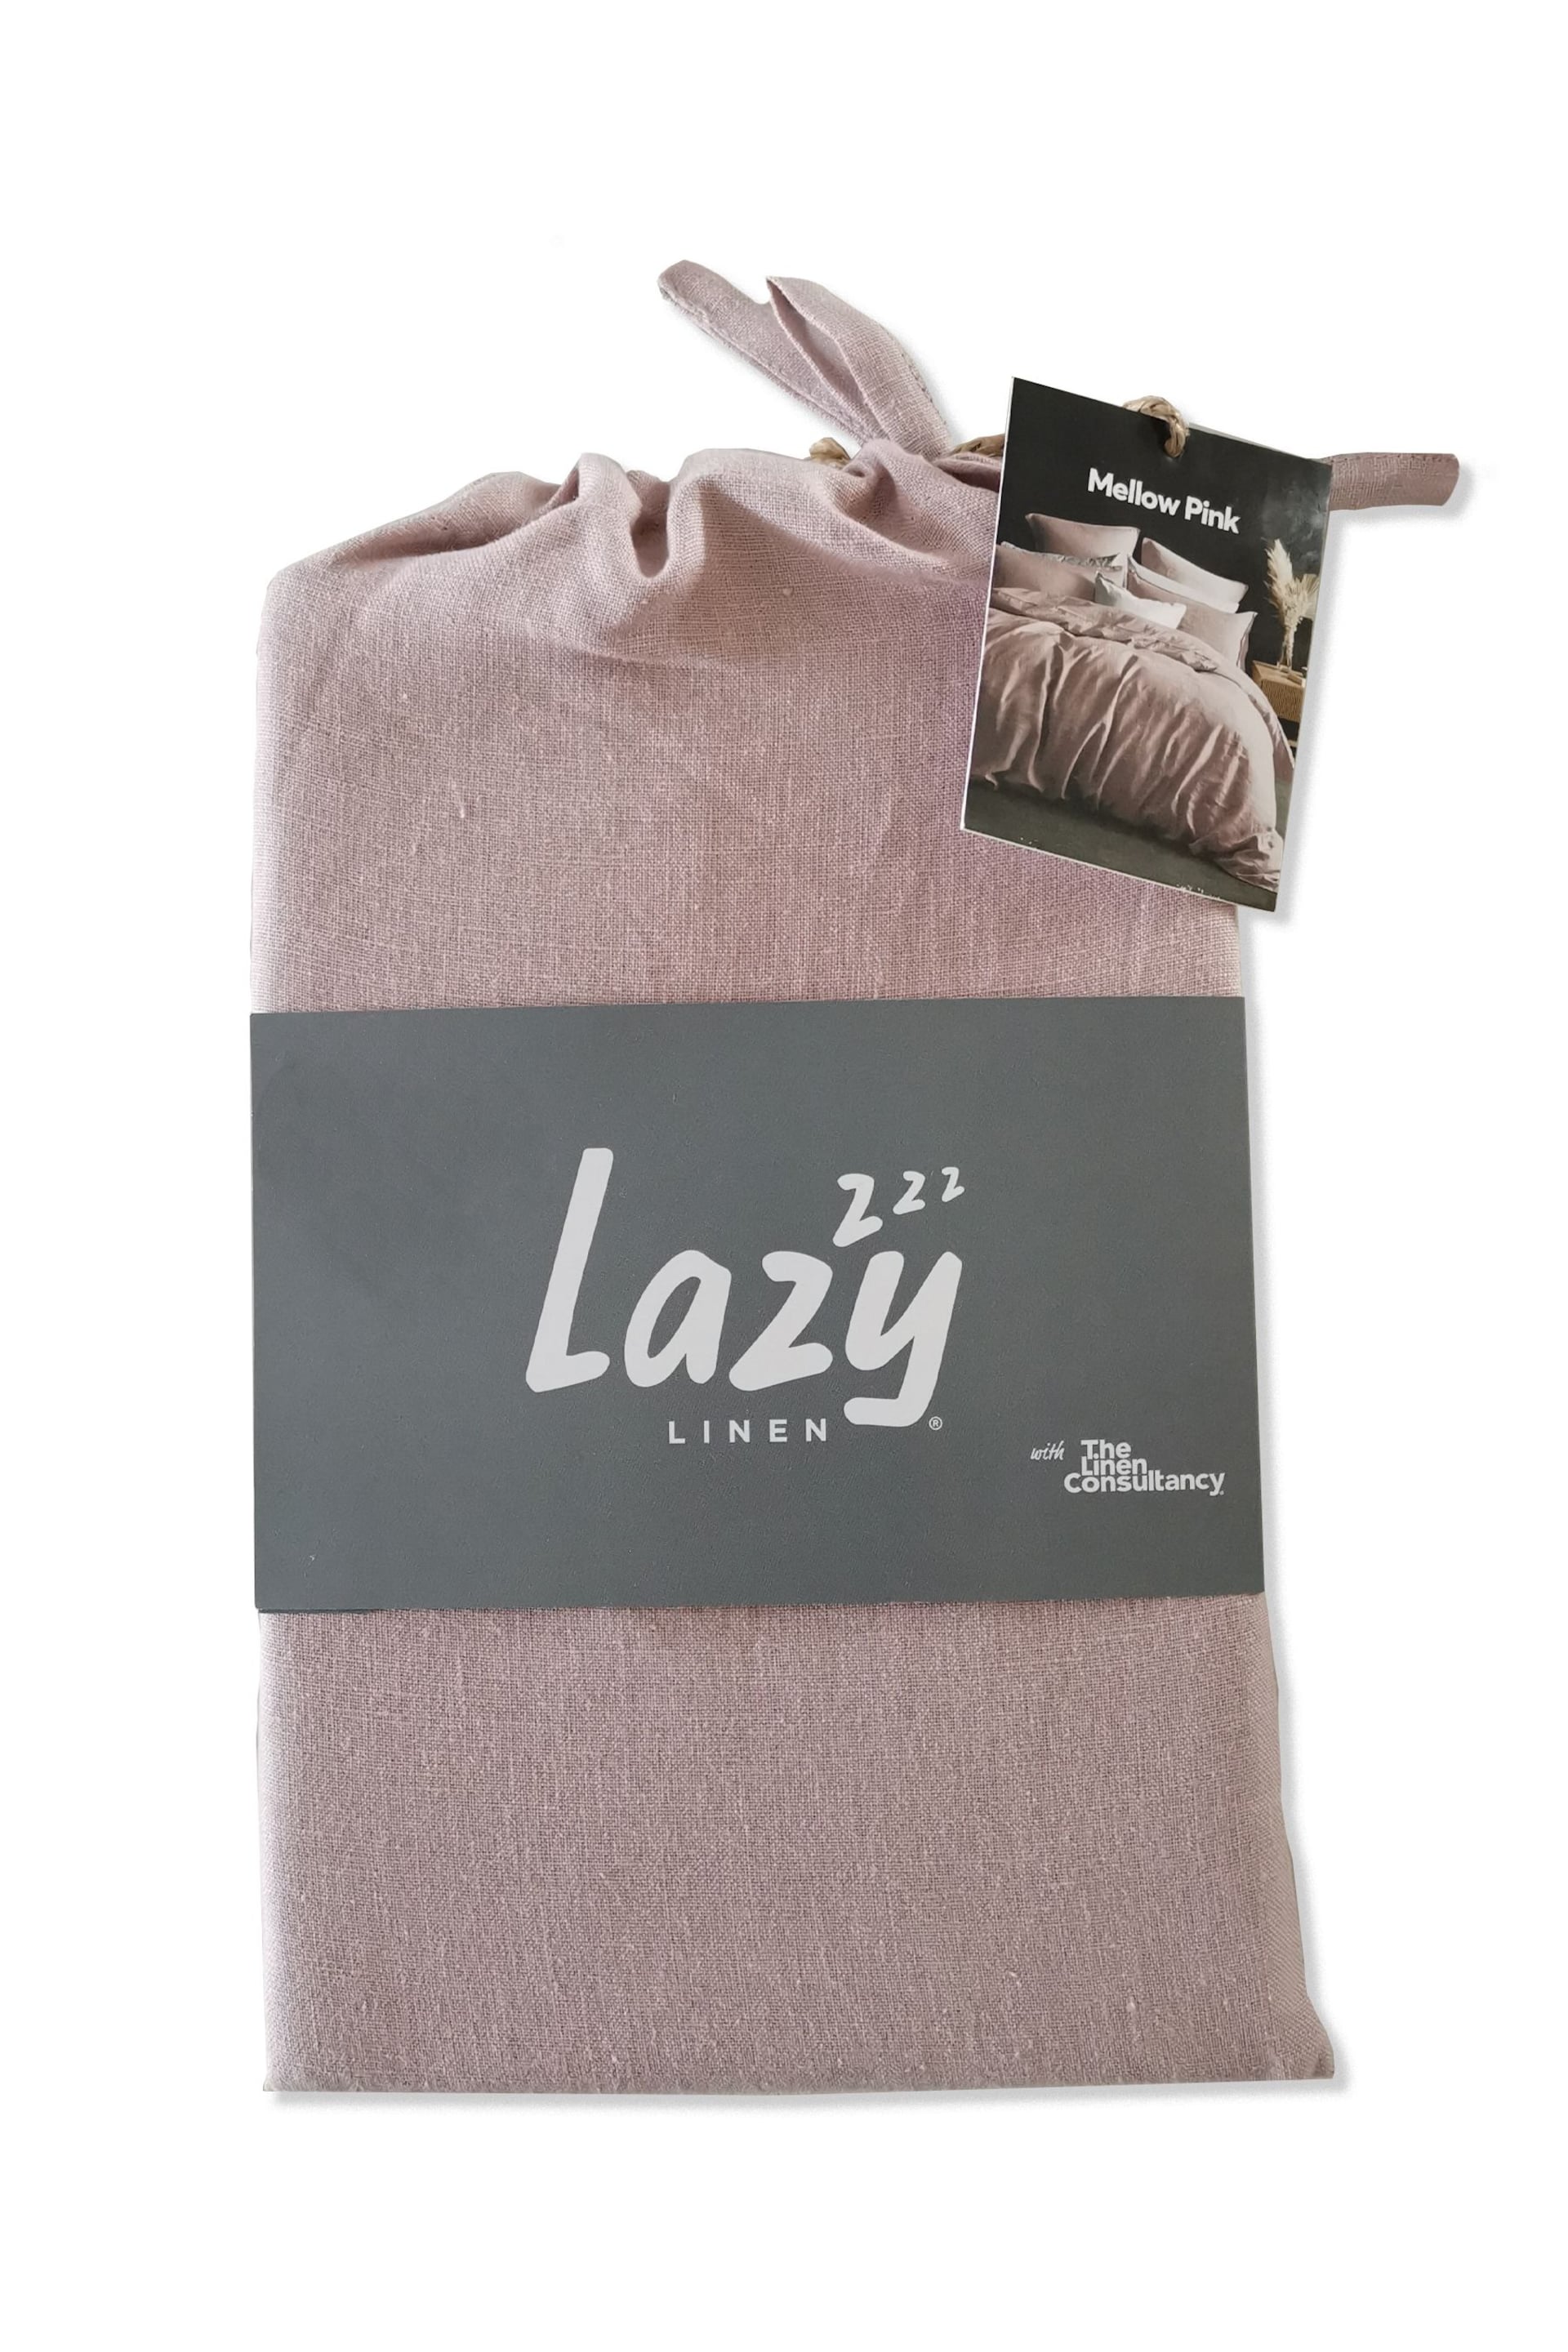 Lazy Linen Pink 100% Washed Linen Duvet Cover - Image 2 of 2